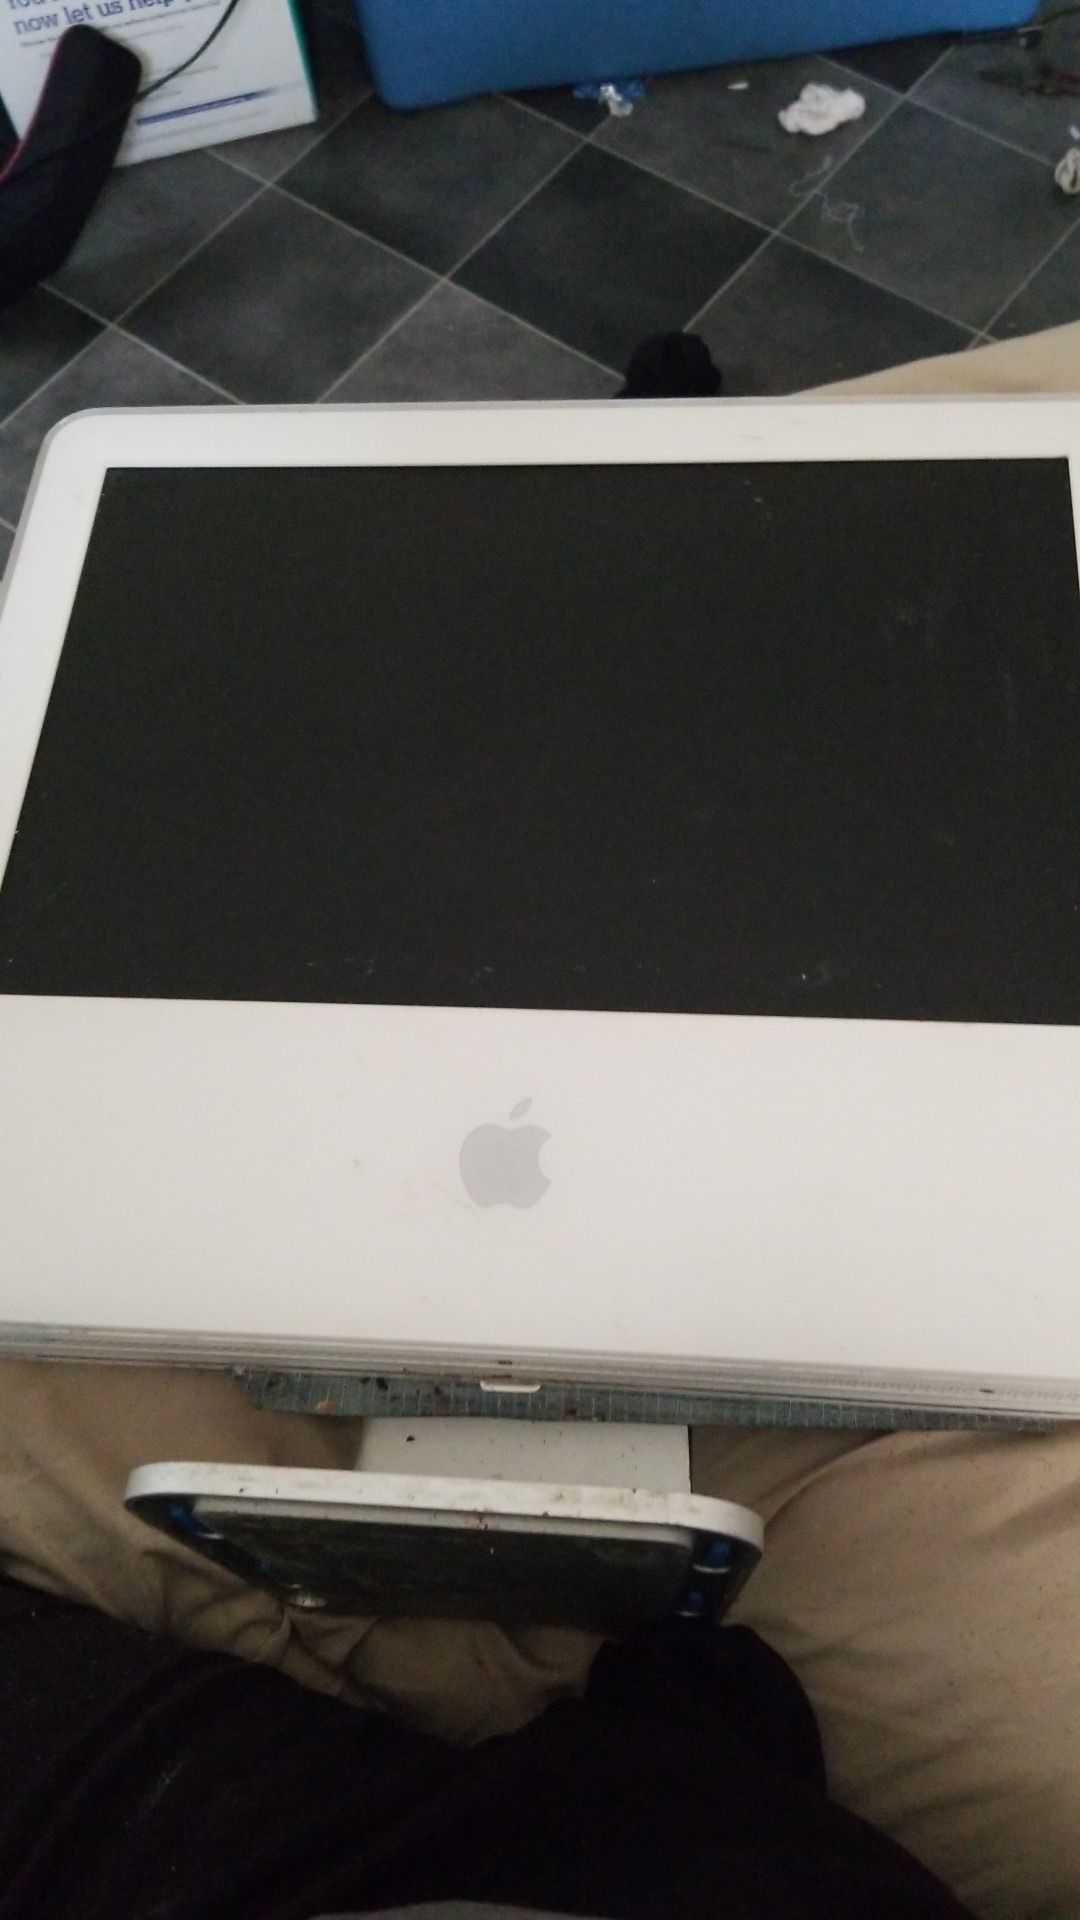 04 iMac $40